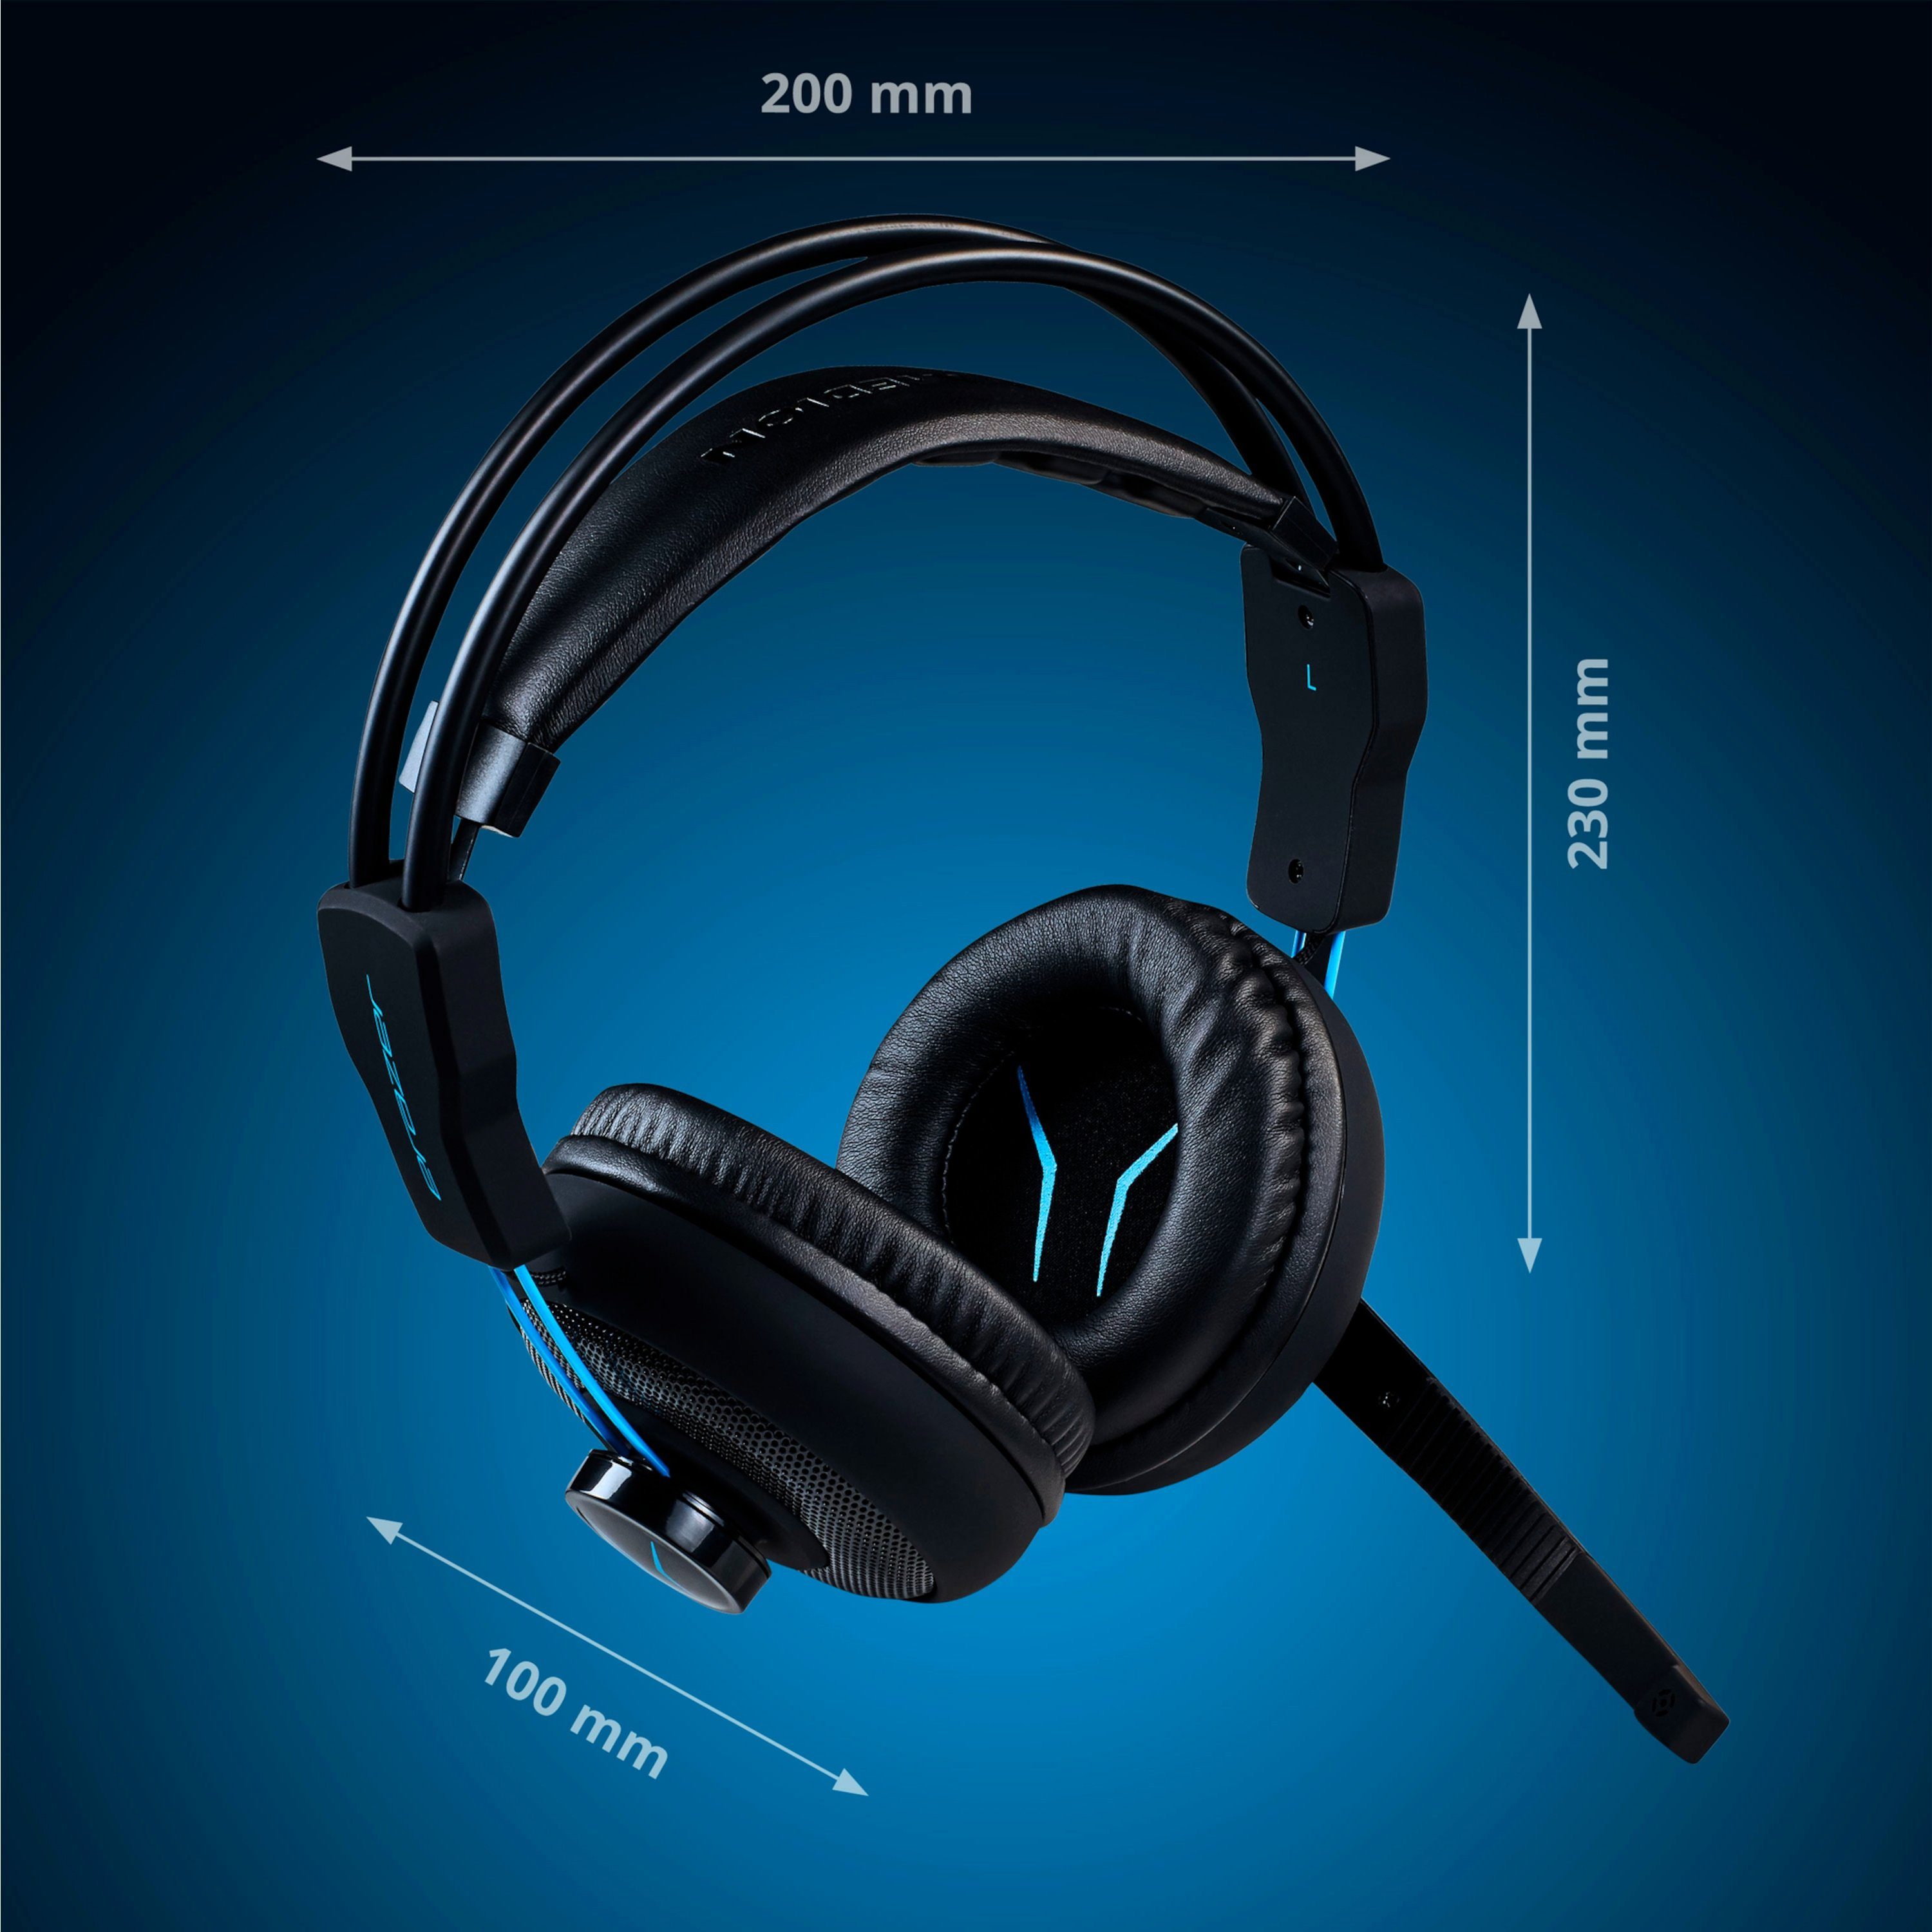 Headset ERAZER Stummtaste MD88640) Mage Gaming, Over Ear-Design P10 Over-Ear-Kopfhörer Bass (Ergonomisch, für Mikrofon, Integriertes Lautstärkeregler, Medion® Gaming Mikrofon, Kopfhörer